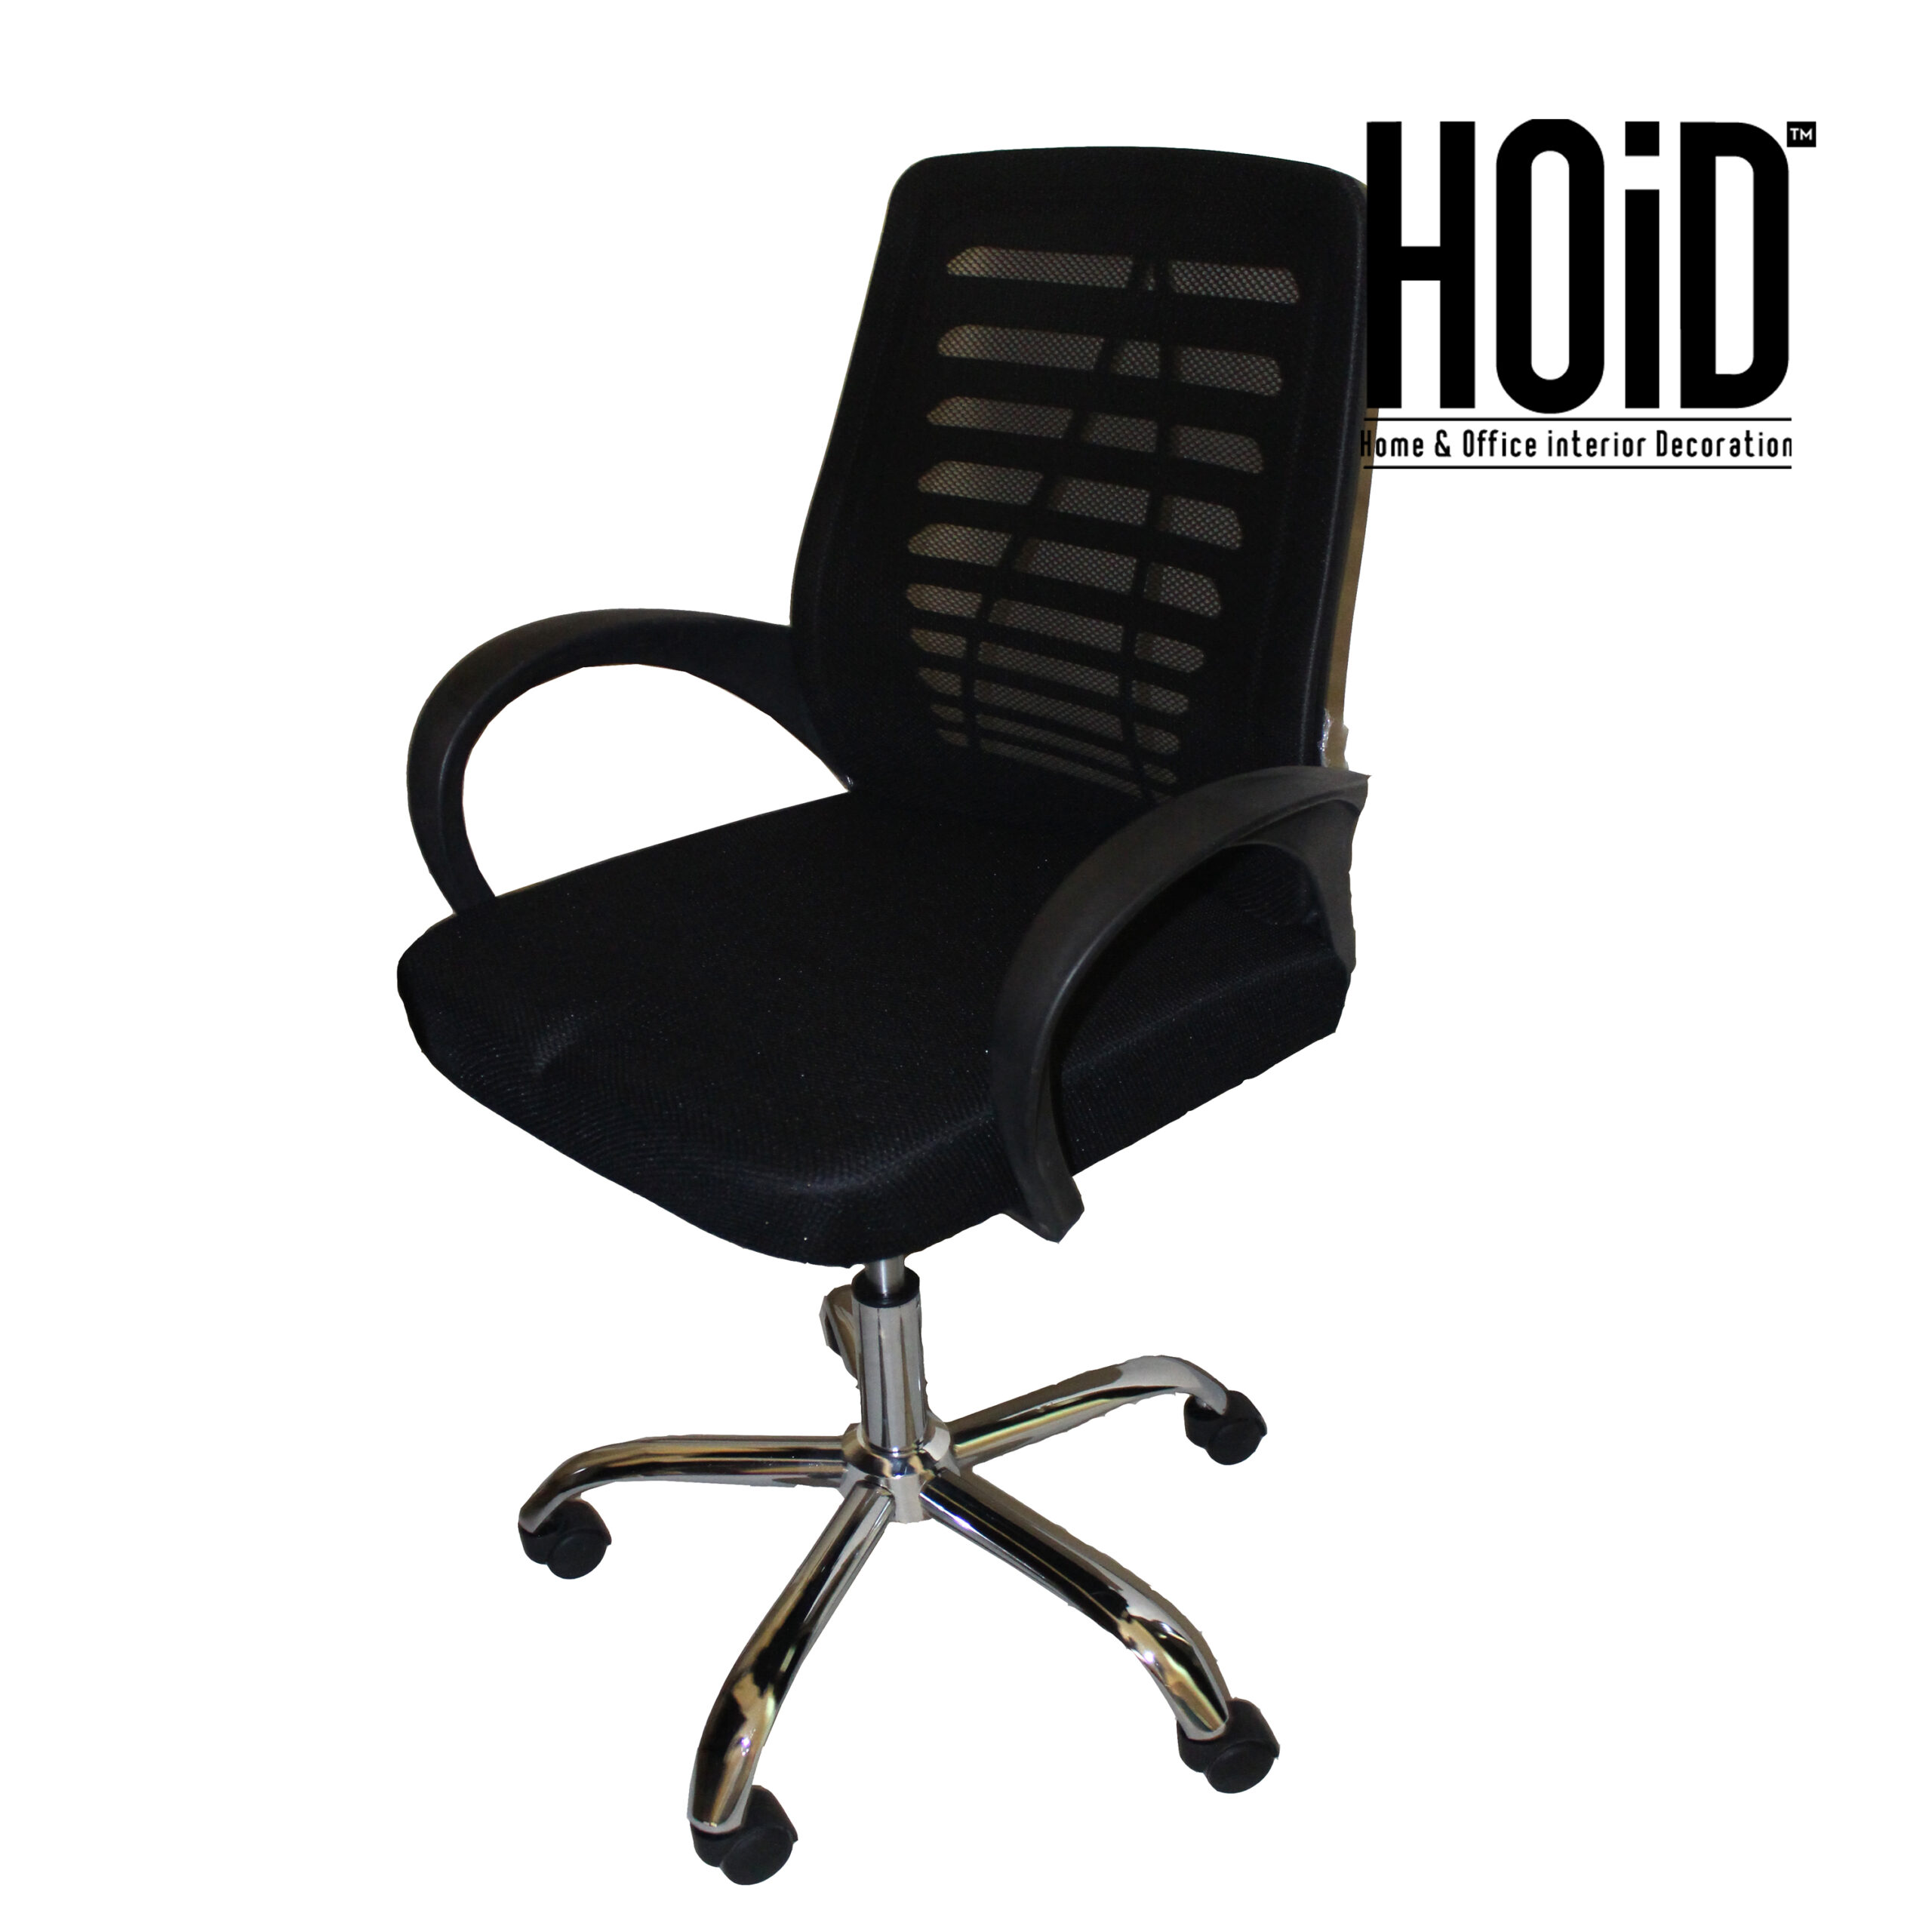 prim-office-chair-scaled-2.jpg